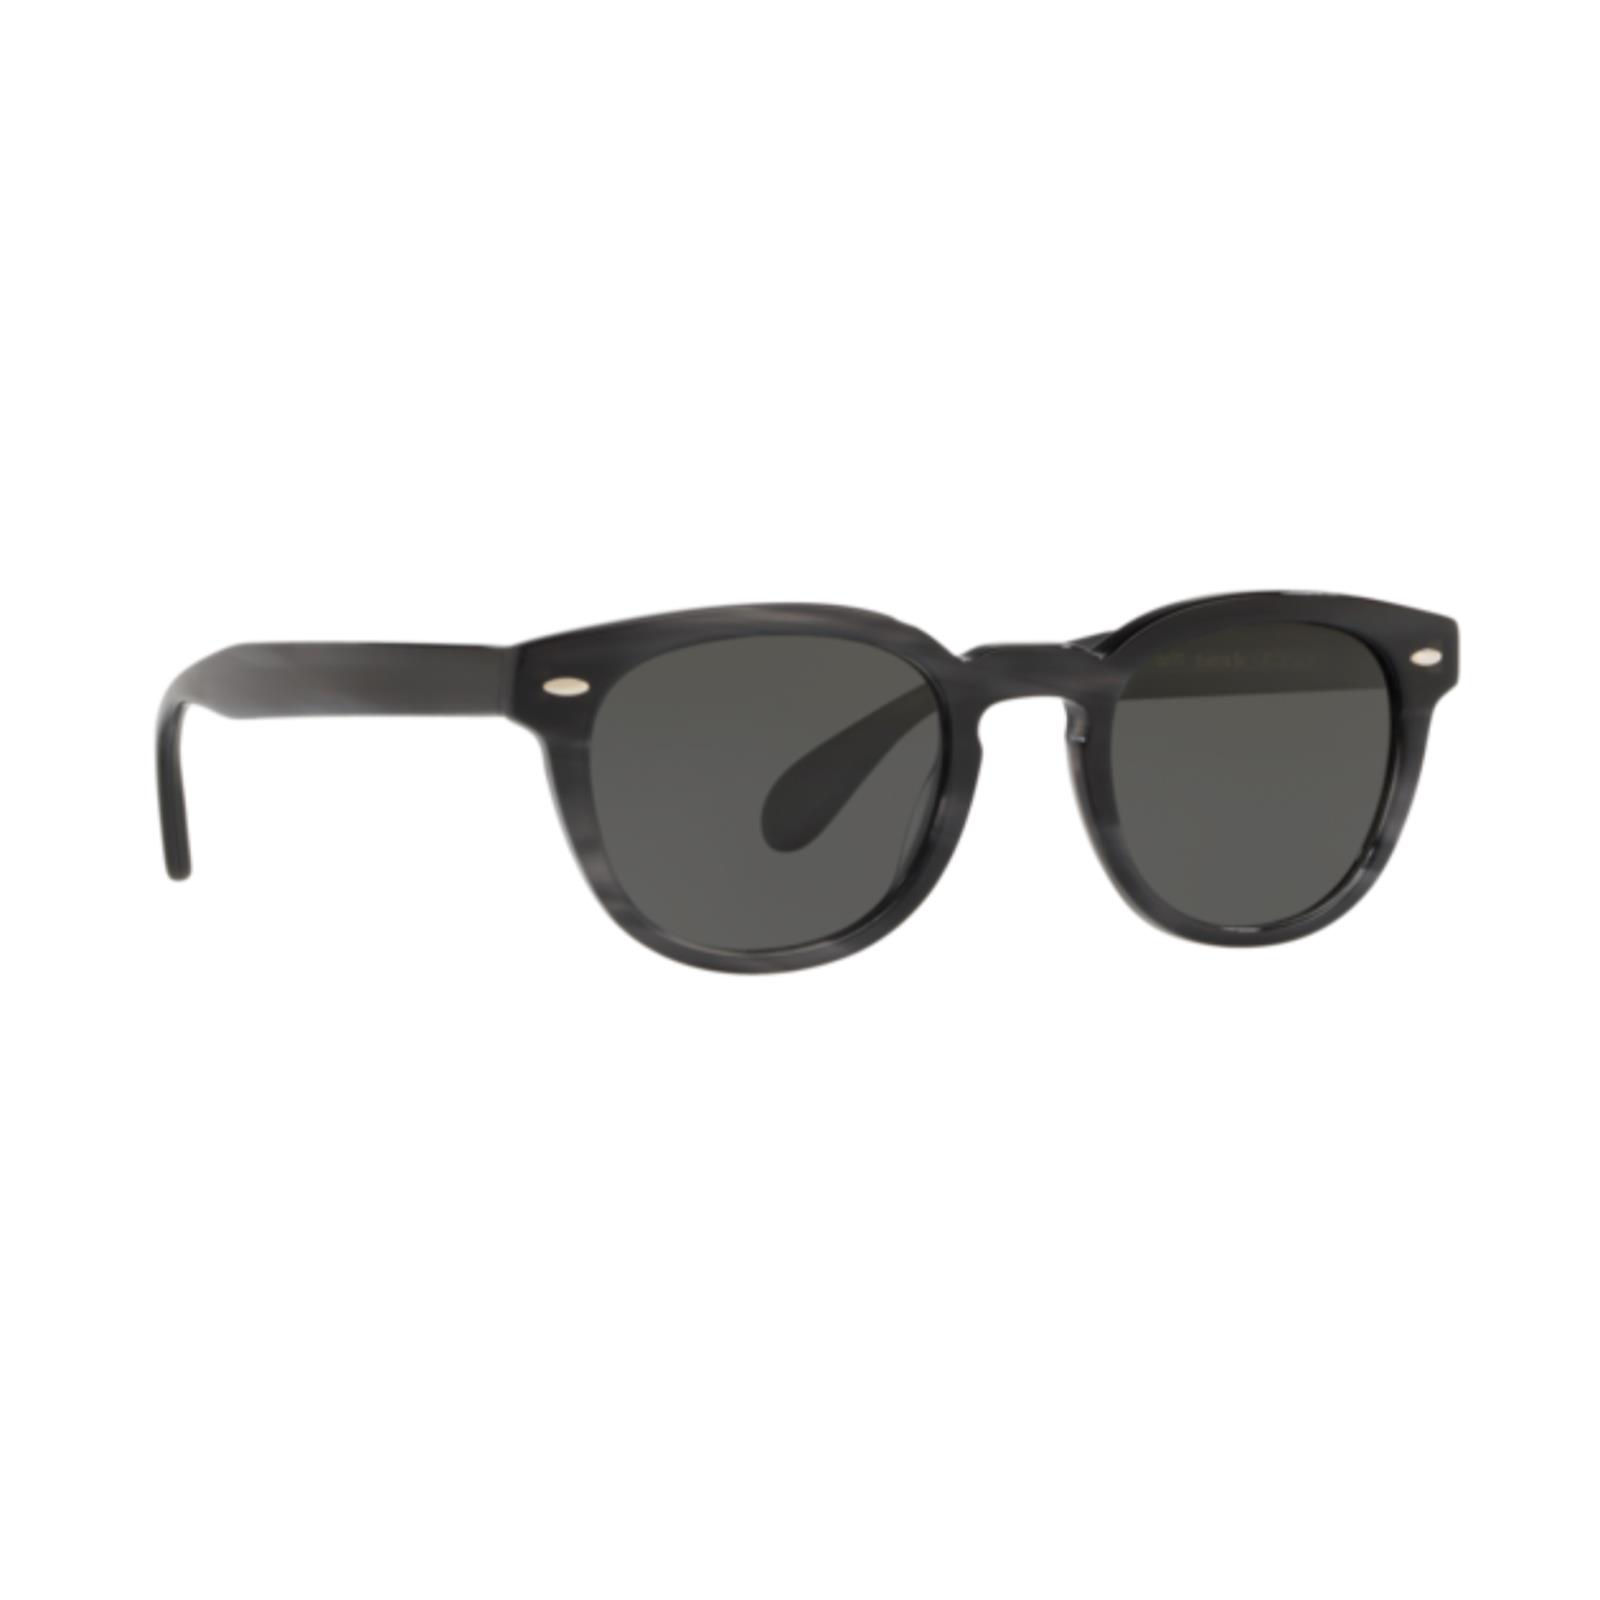 Oliver Peoples Polarized Sunglasses Sheldrake OV 5036-S 1661P2 Charcoal Tortoise